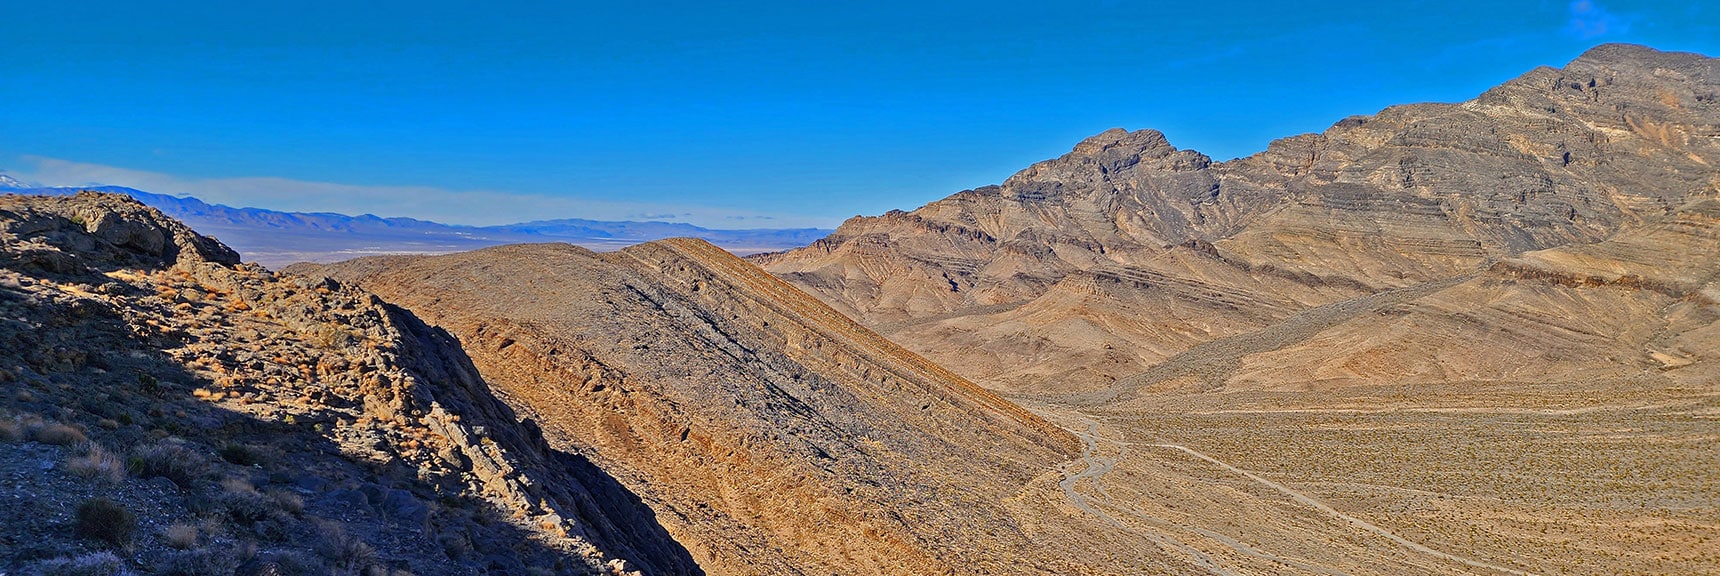 Fossil Ridge and Southeastern Sheep Range | Fossil Ridge Far East | Desert National Wildlife Refuge, Nevada